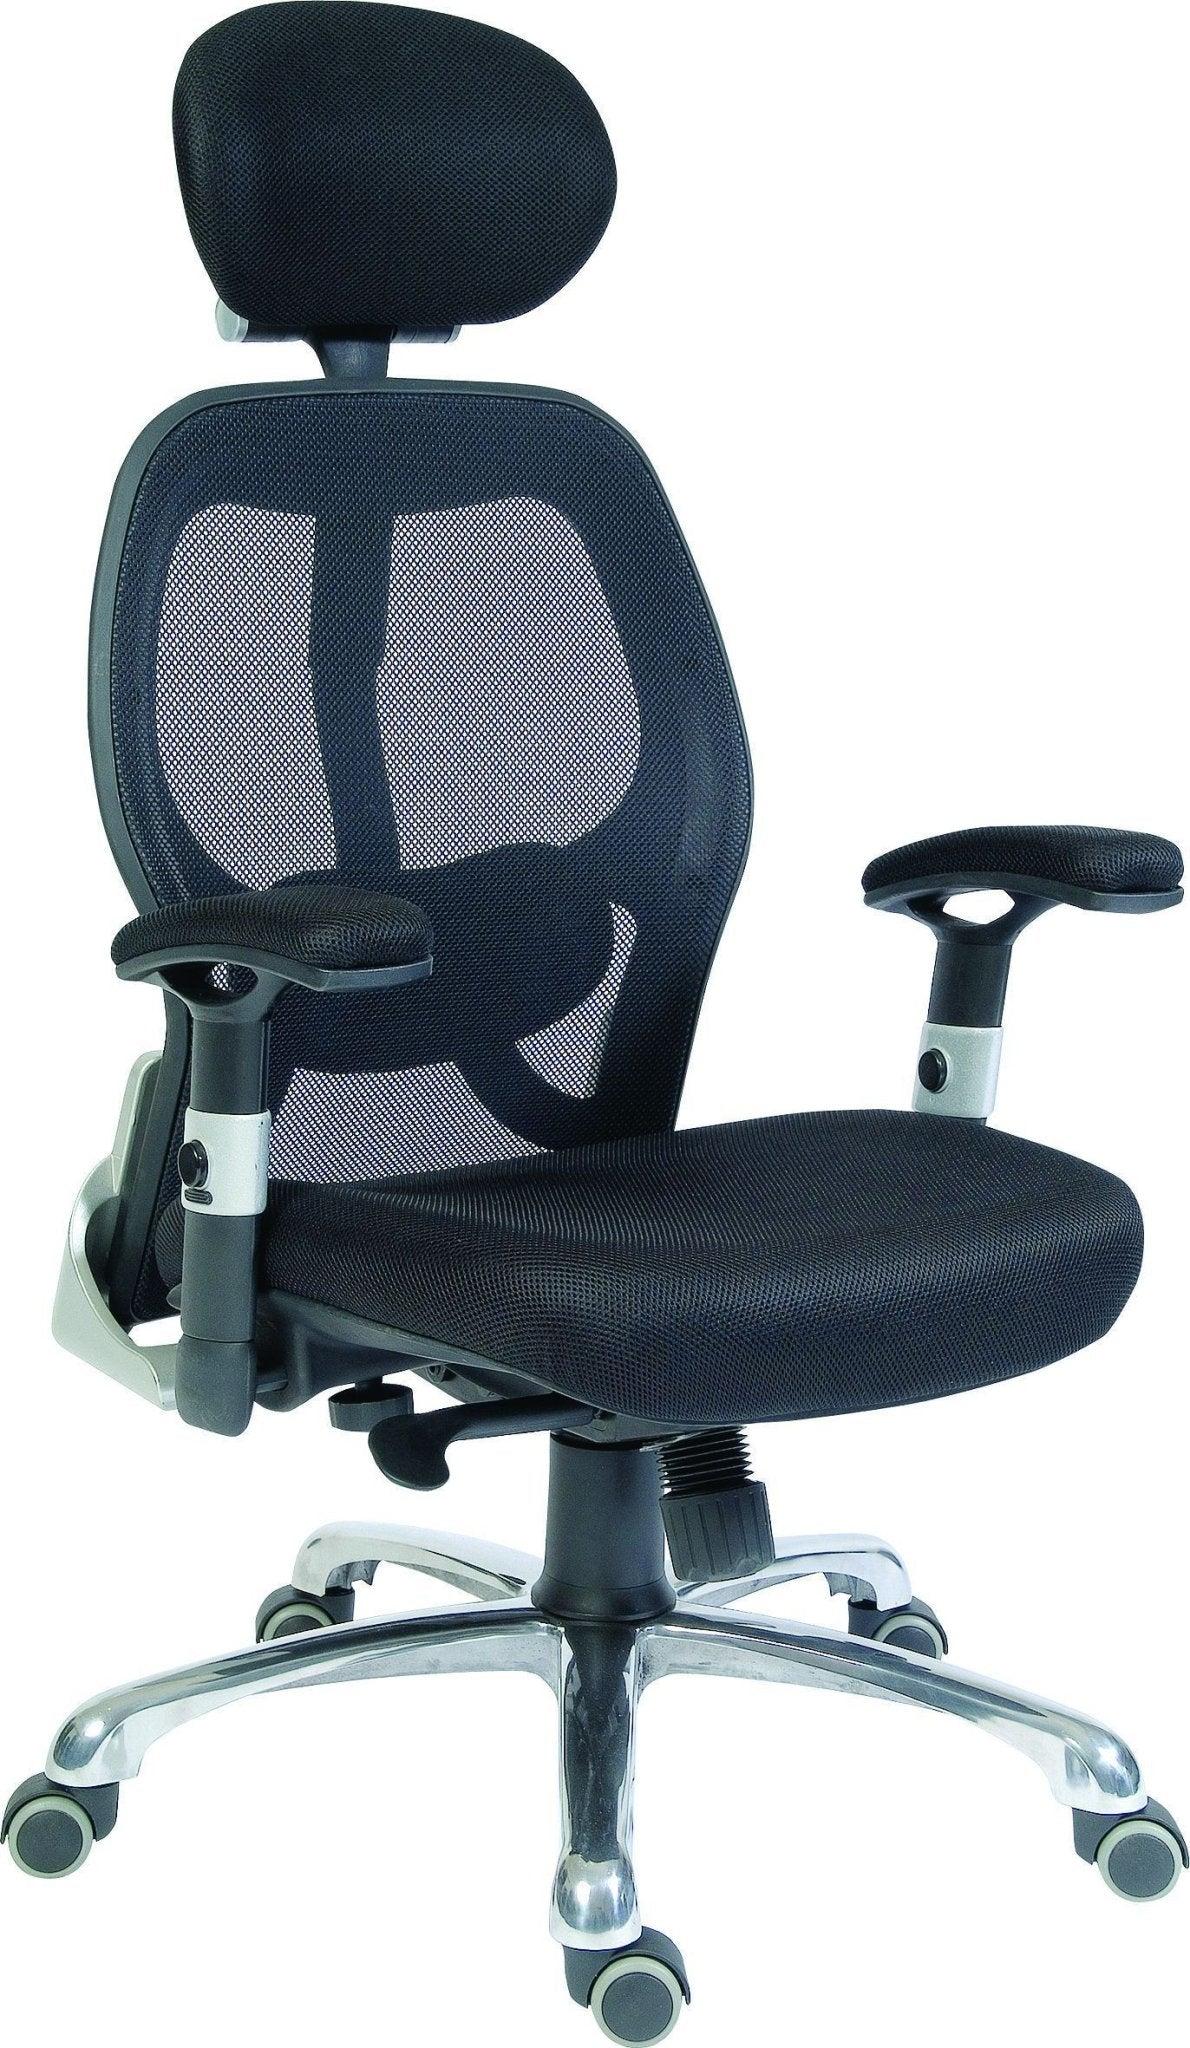 Cobham office chair(black) - crimblefest furniture - image 1